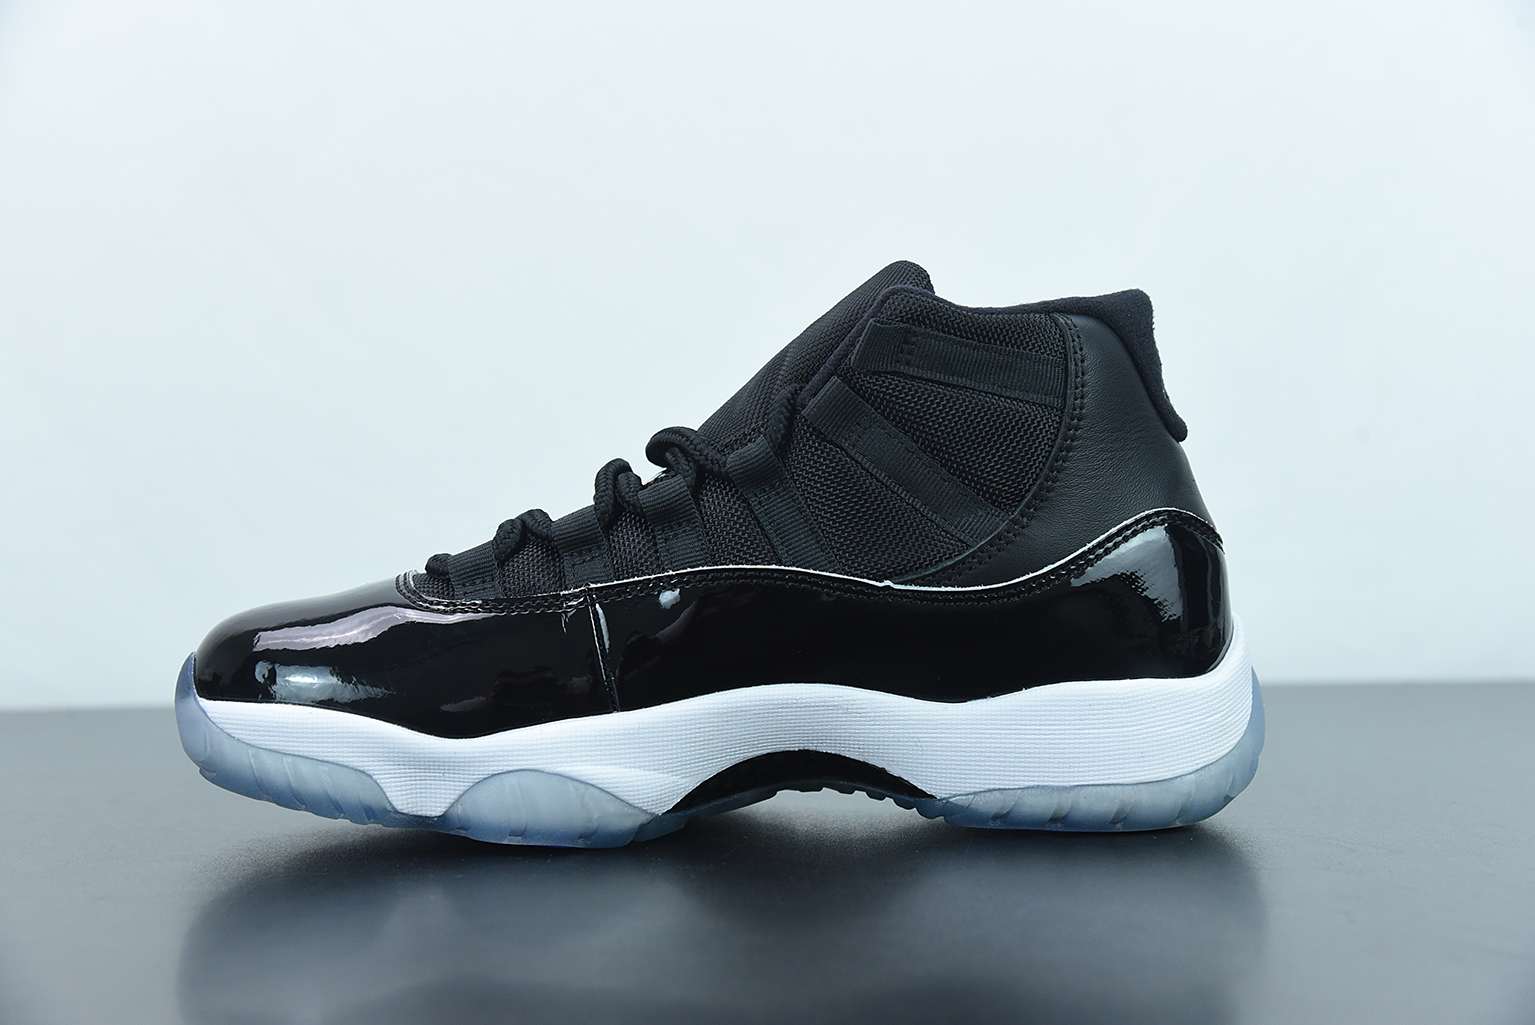 Jordan Men's Zoom Separate Basketball Shoes in Black/Black Size 11.0